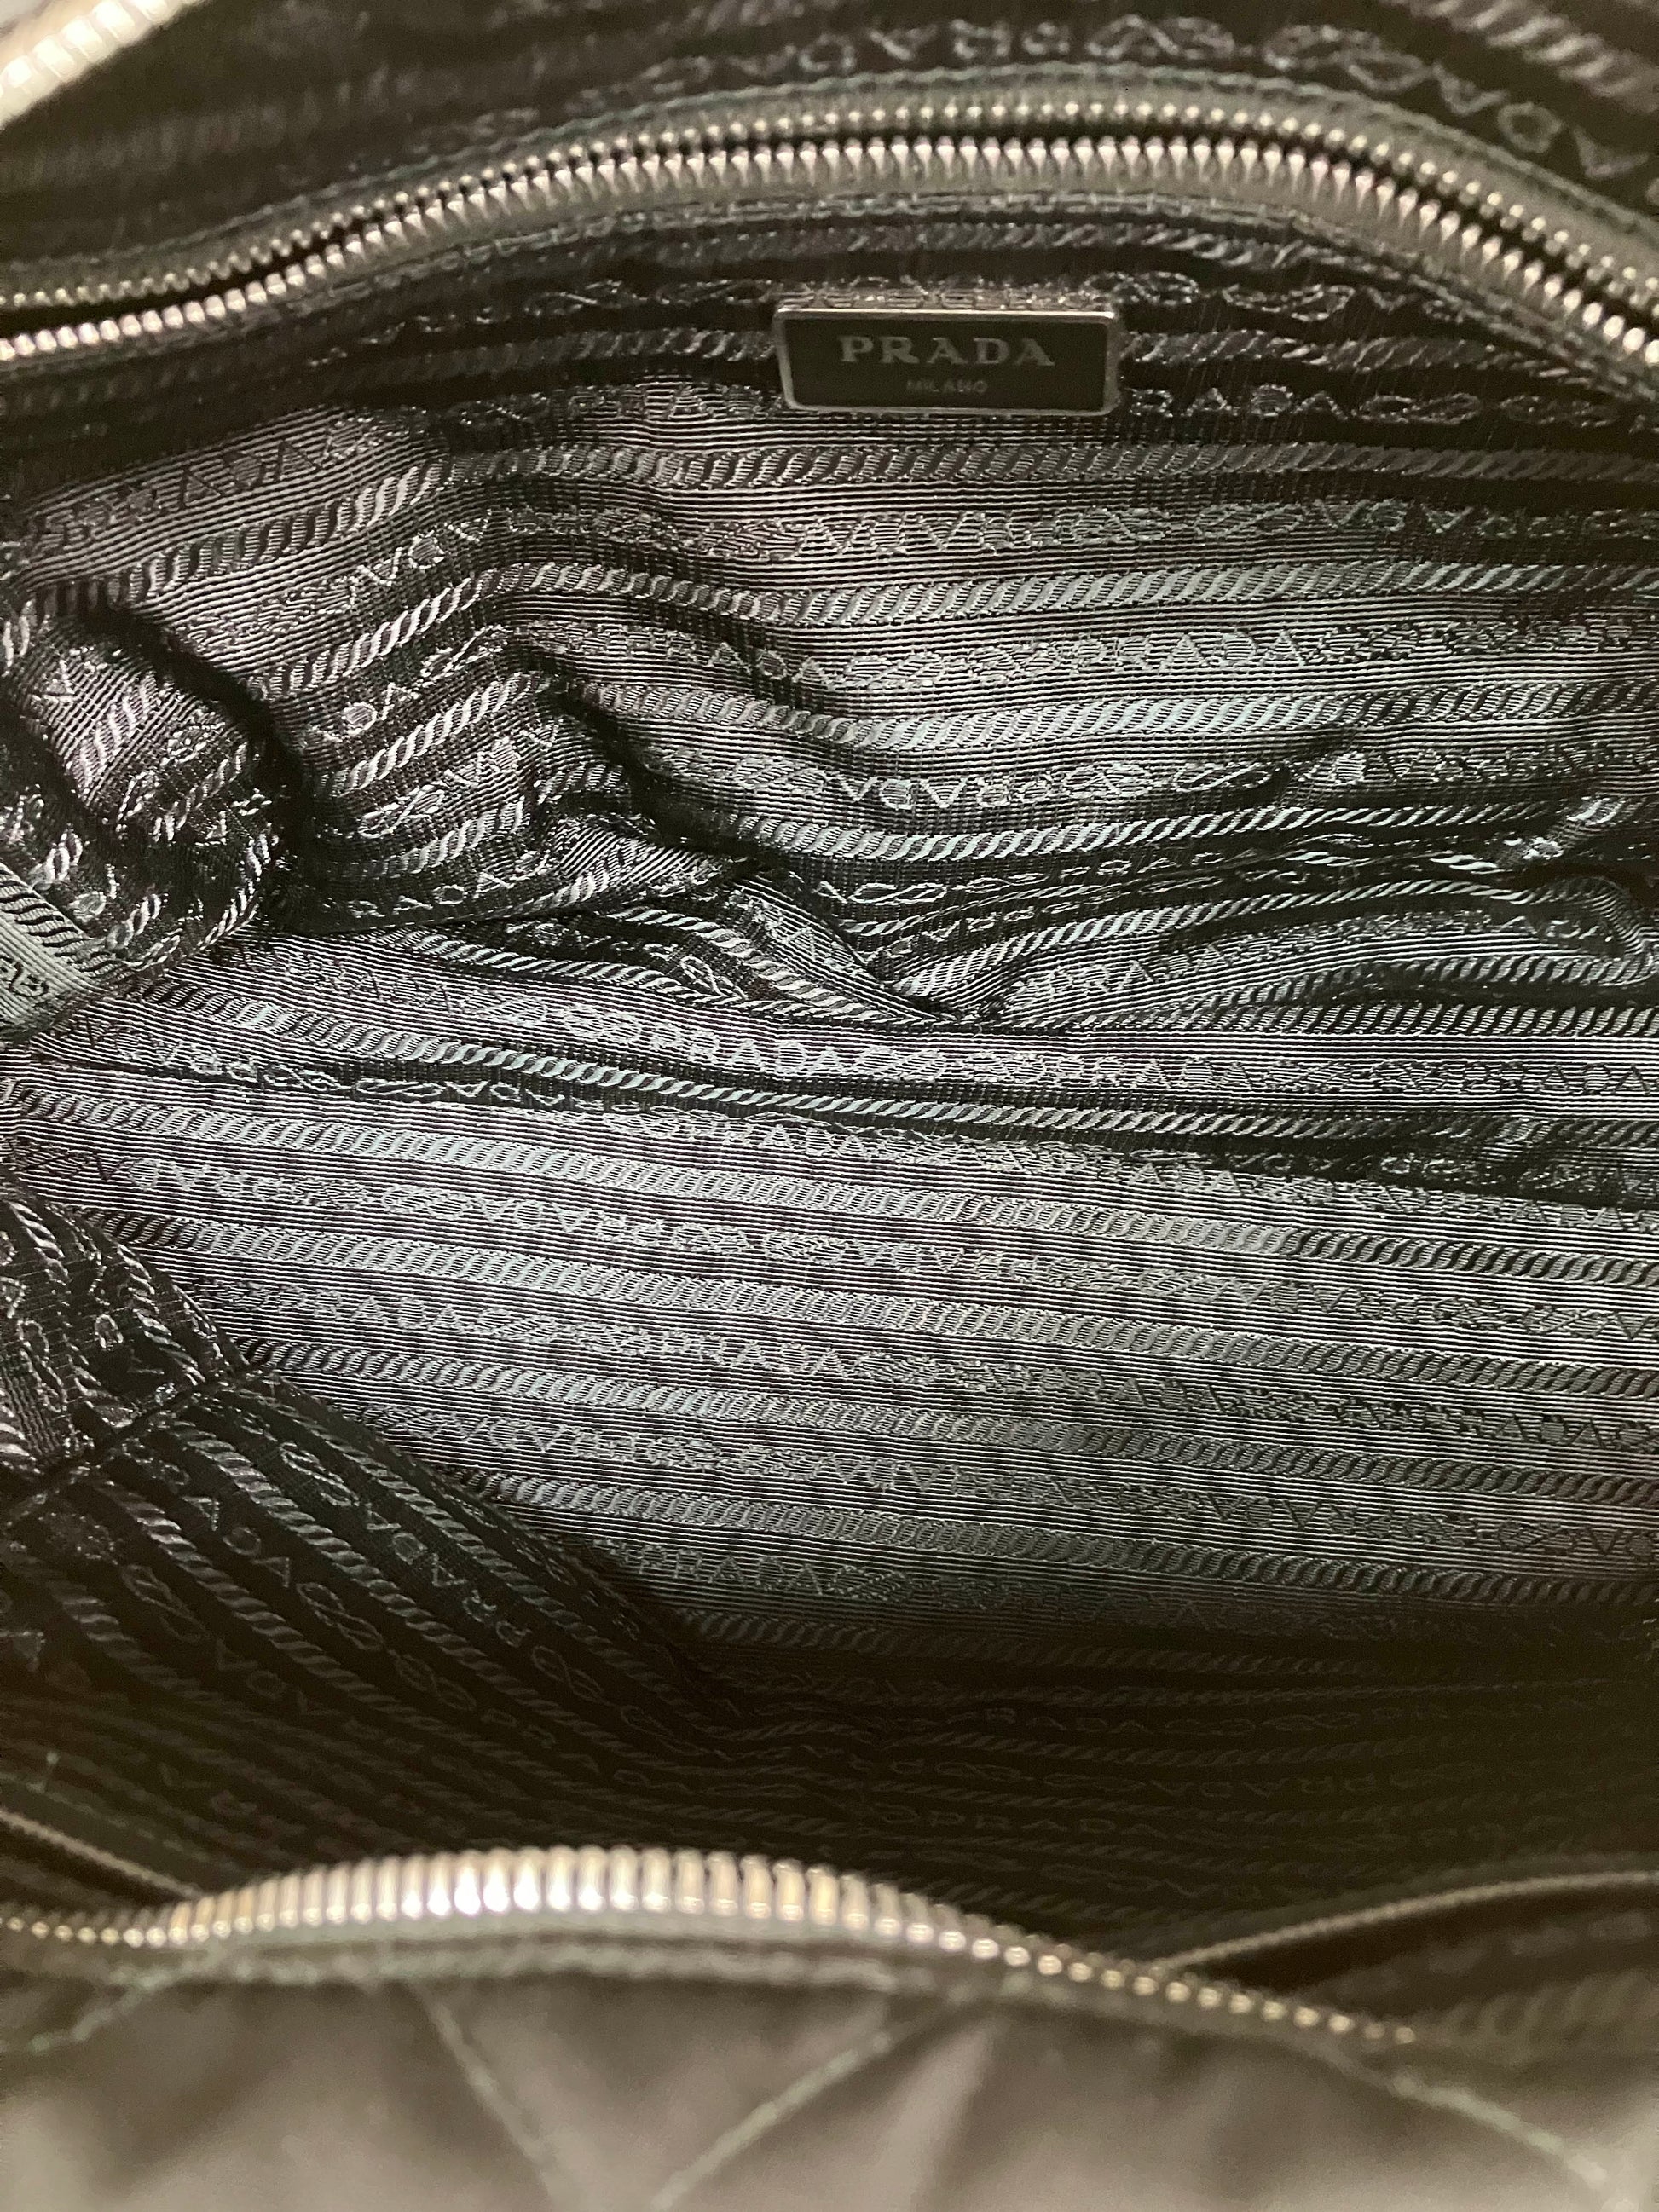 Ada Black Quilted Tote Bag